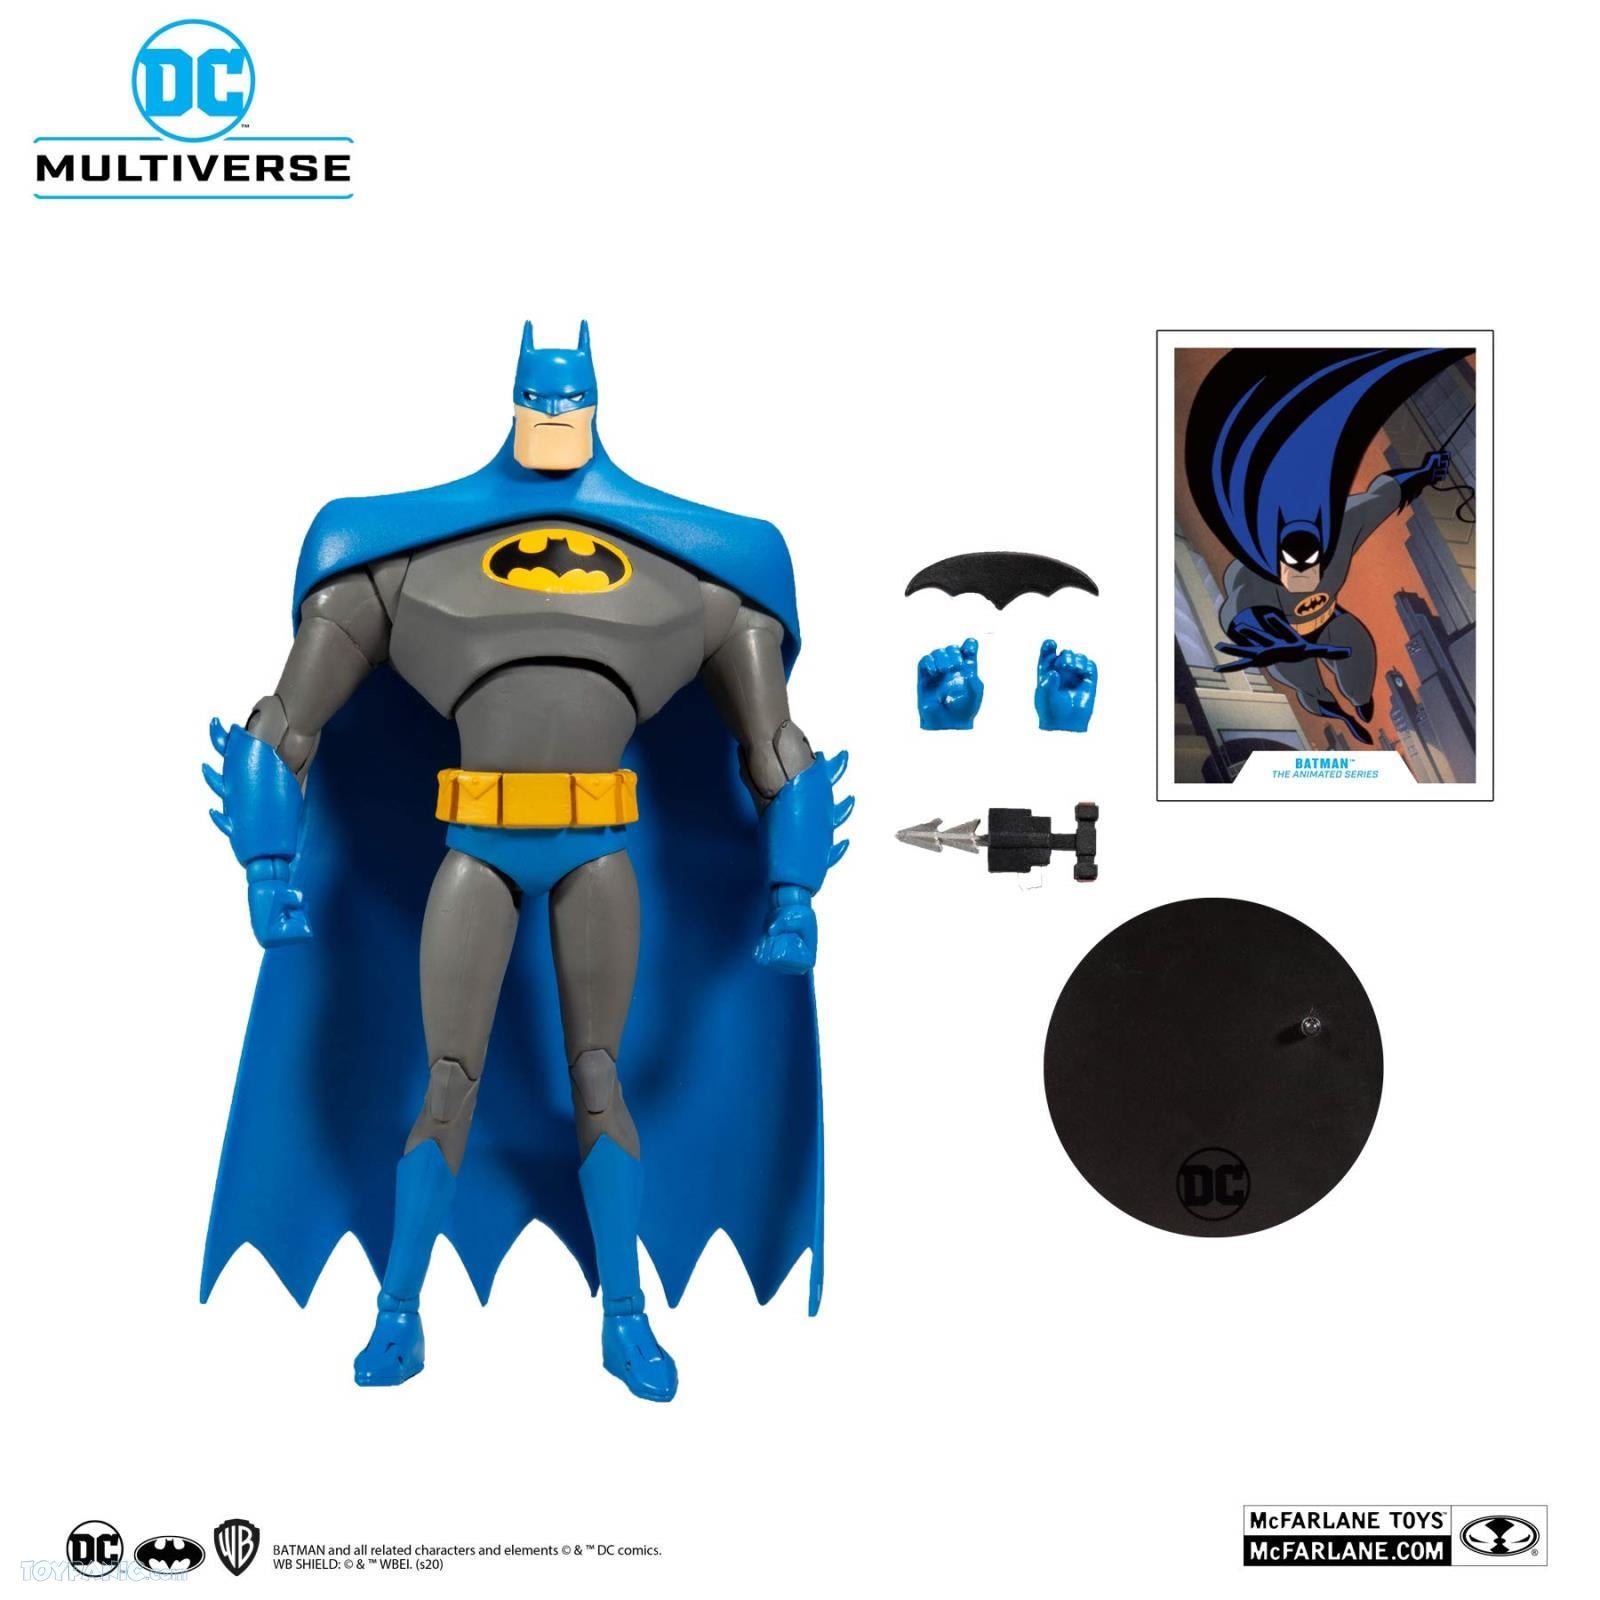 DC Multiverse Batman Animated Series Blue Variant - McFarlane Toys